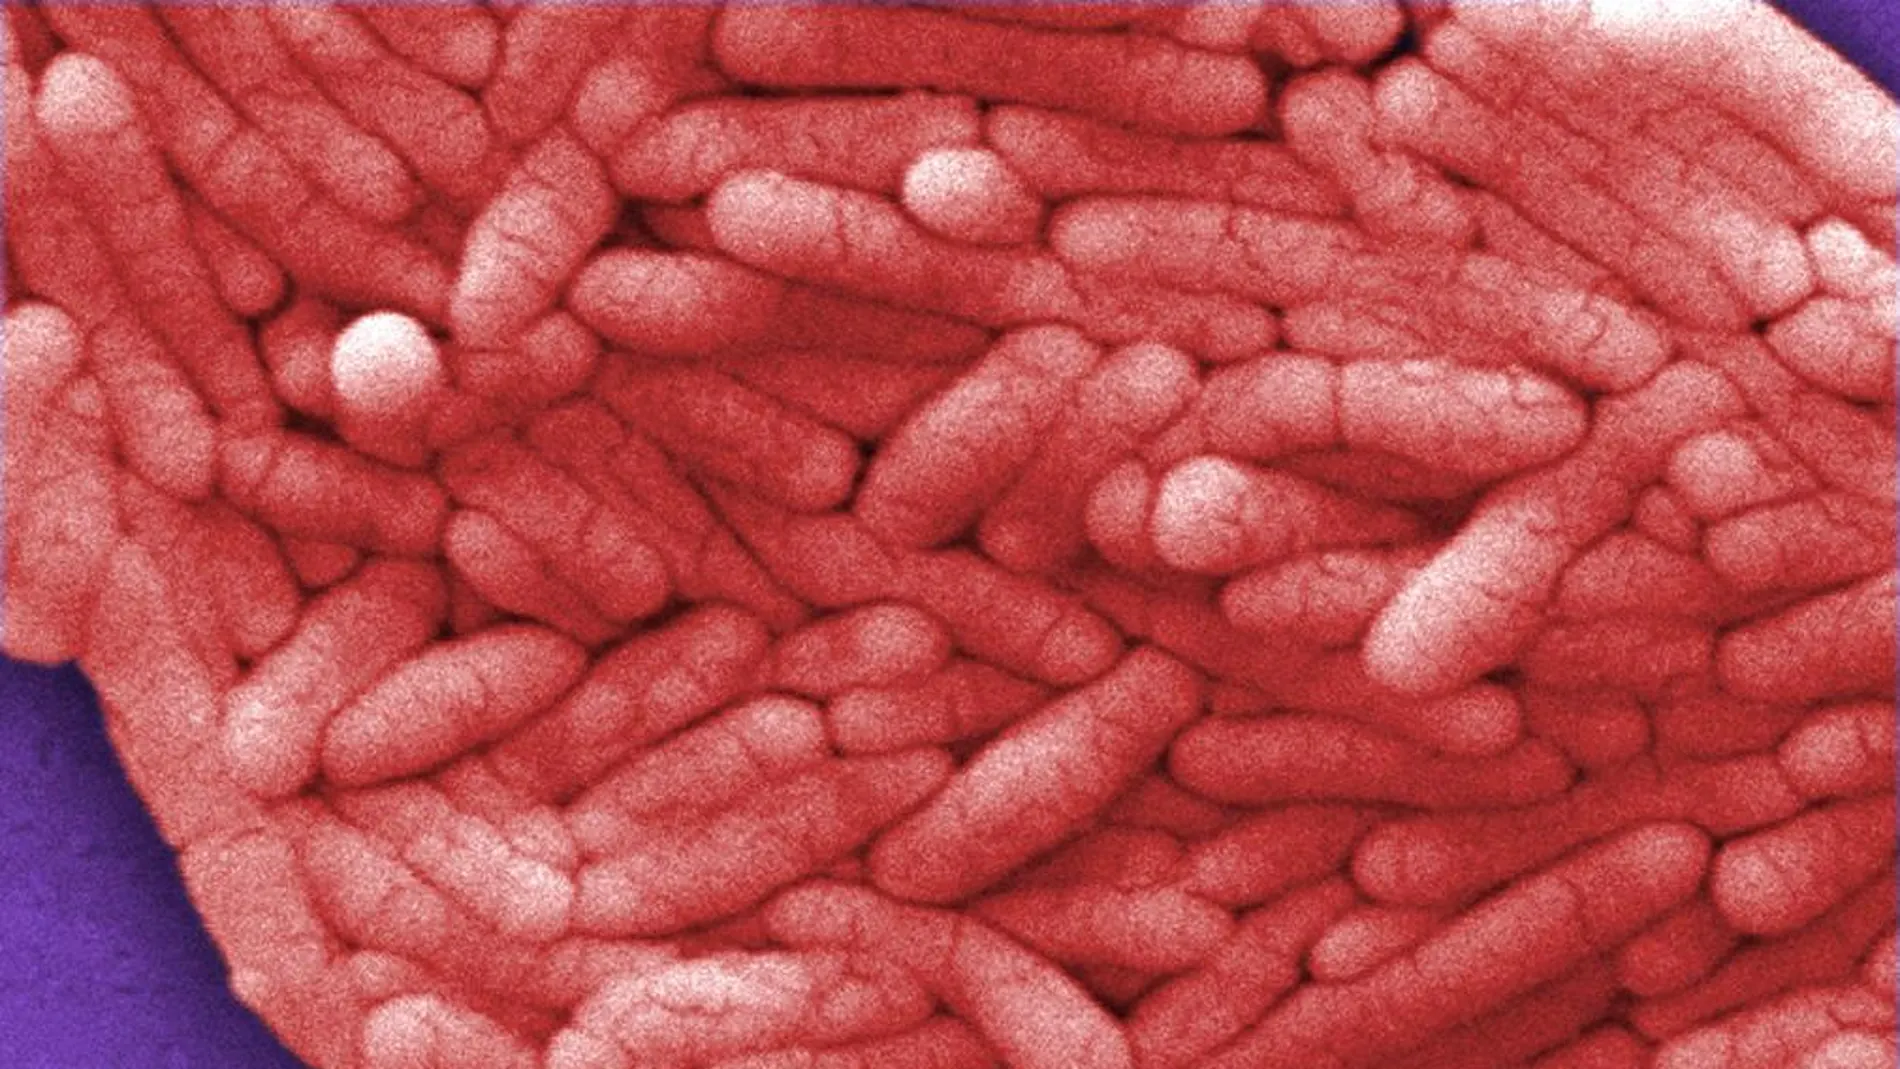 Bacteria de la salmonella